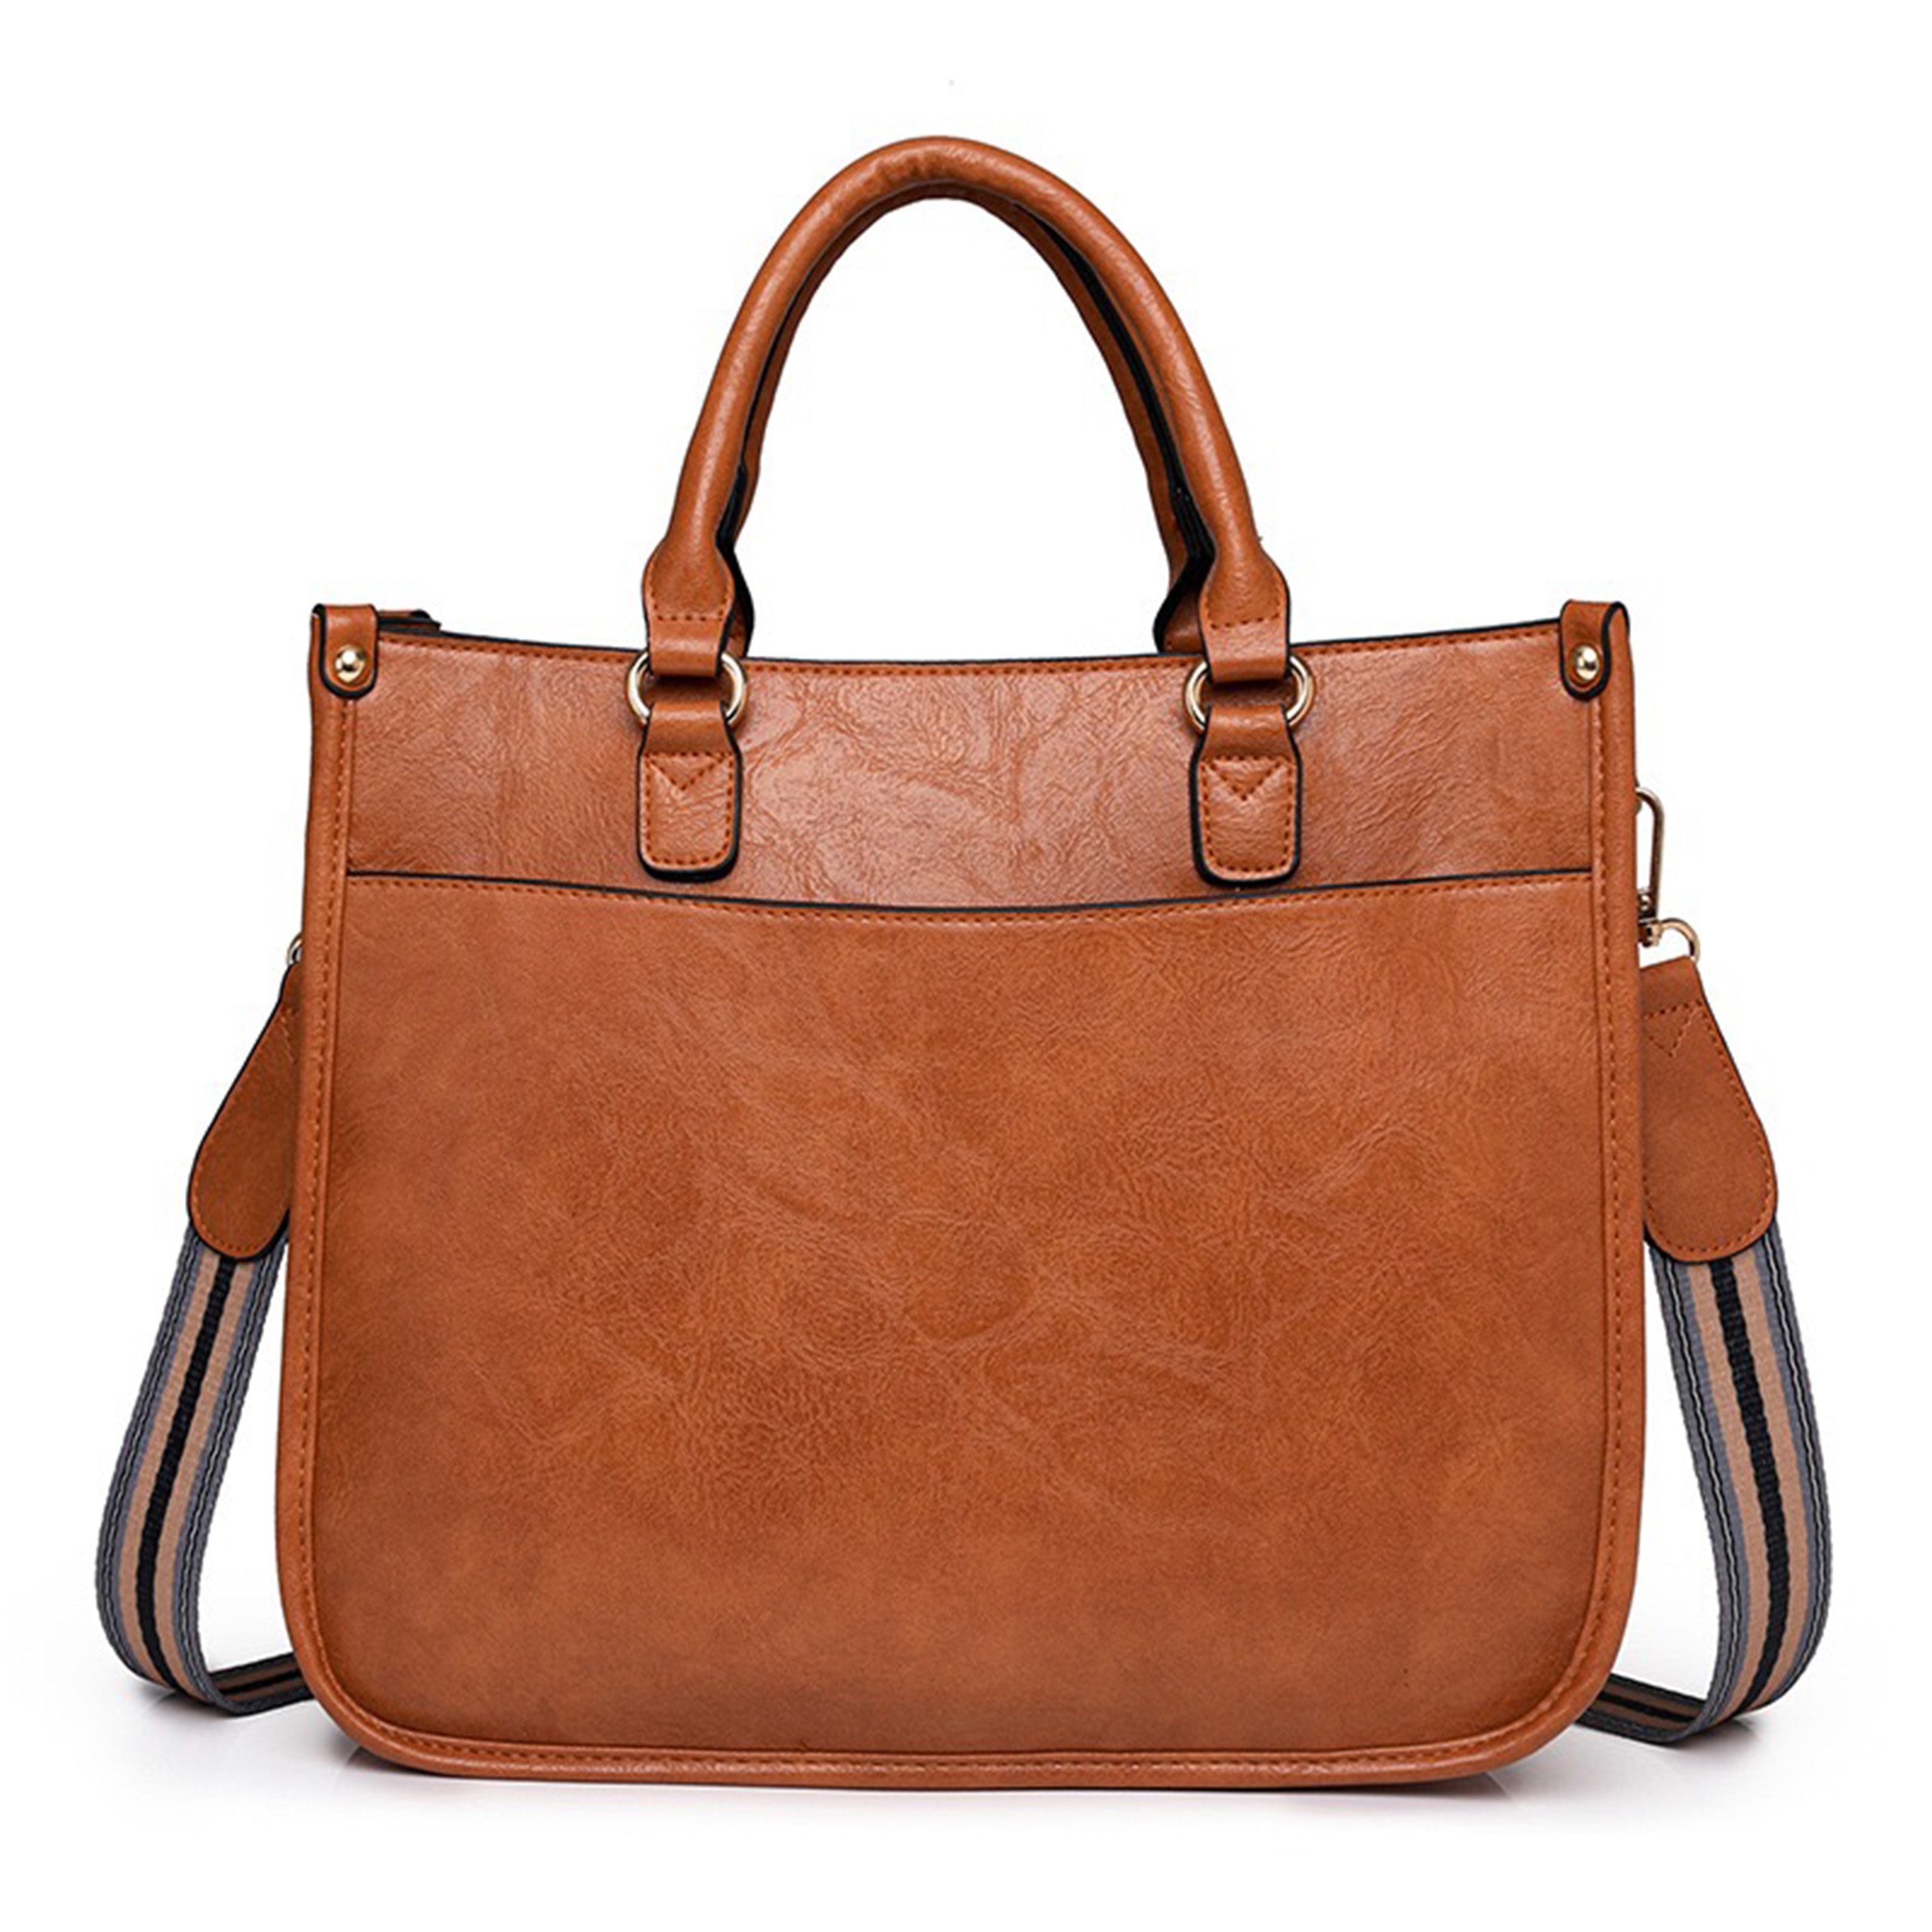 Hobo Bags For Women Large Pu Leather Purses And Handbags Shoulder Bags Ladies Crossbody Bags Top Handle Tote Bag